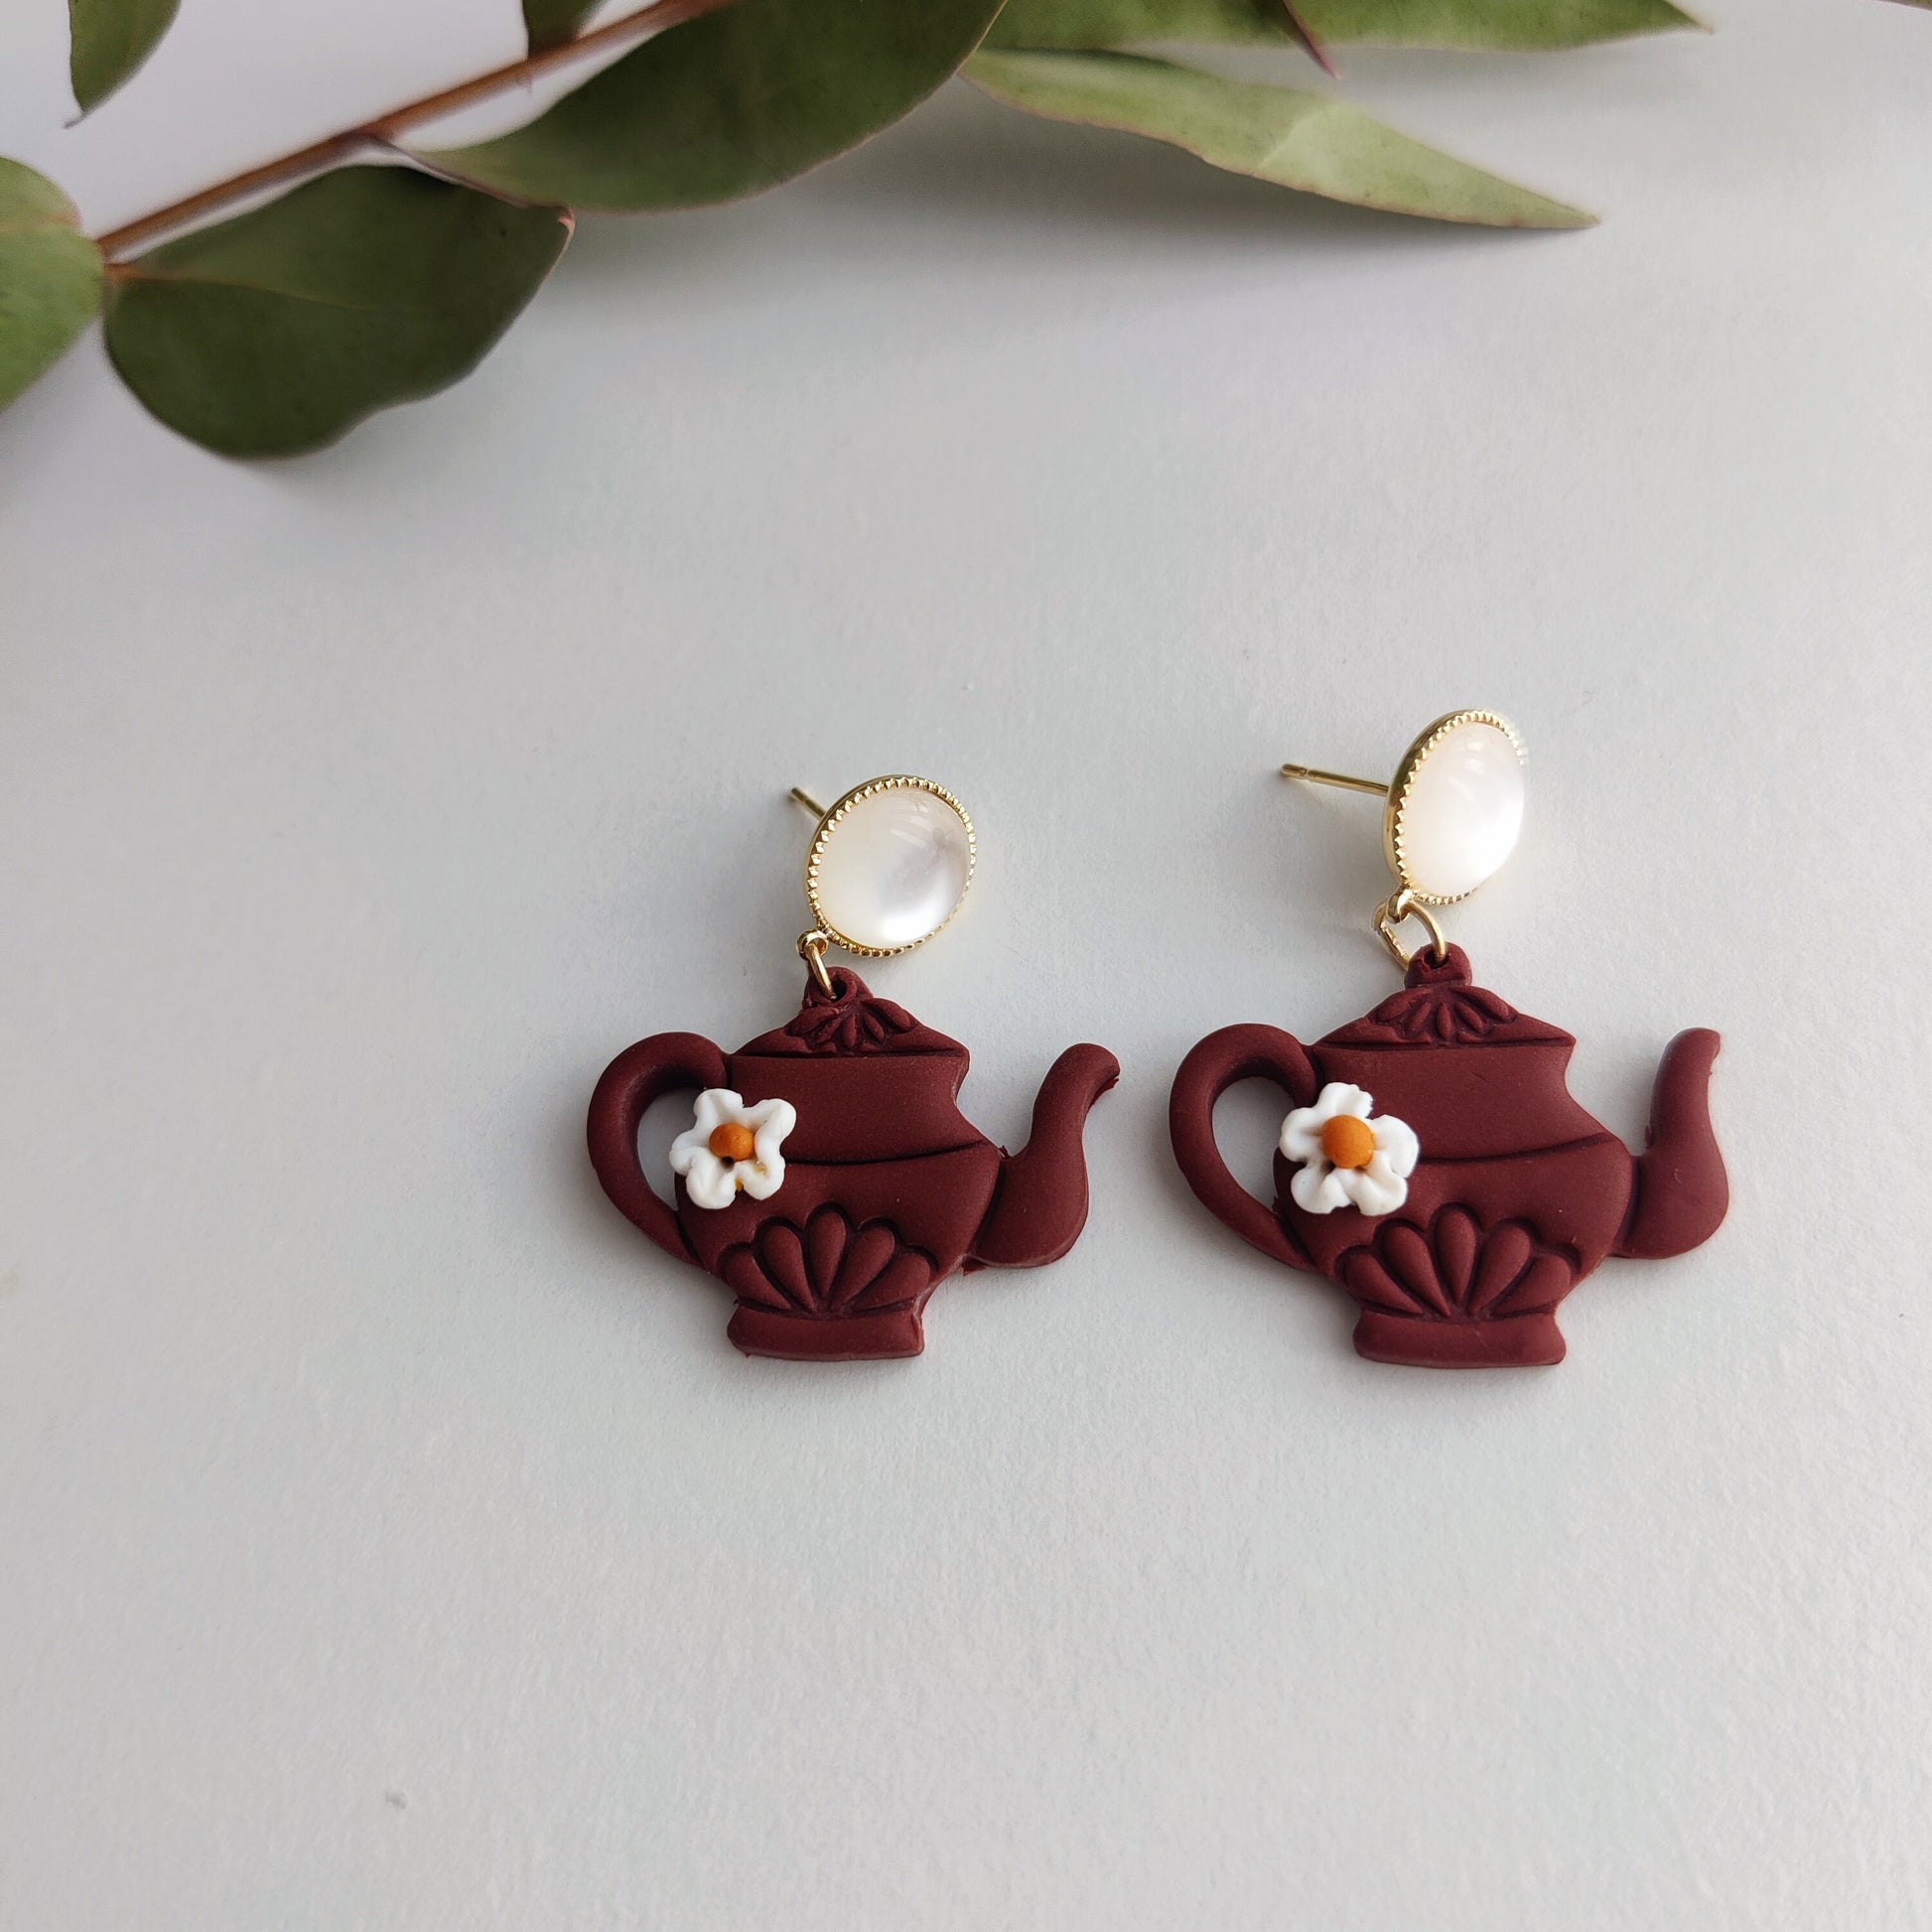 Autumn Collection | Autumn Earrings | Handmade polymer clay earrings | Fall foliage earrings | Fall colors earrings | Halloween